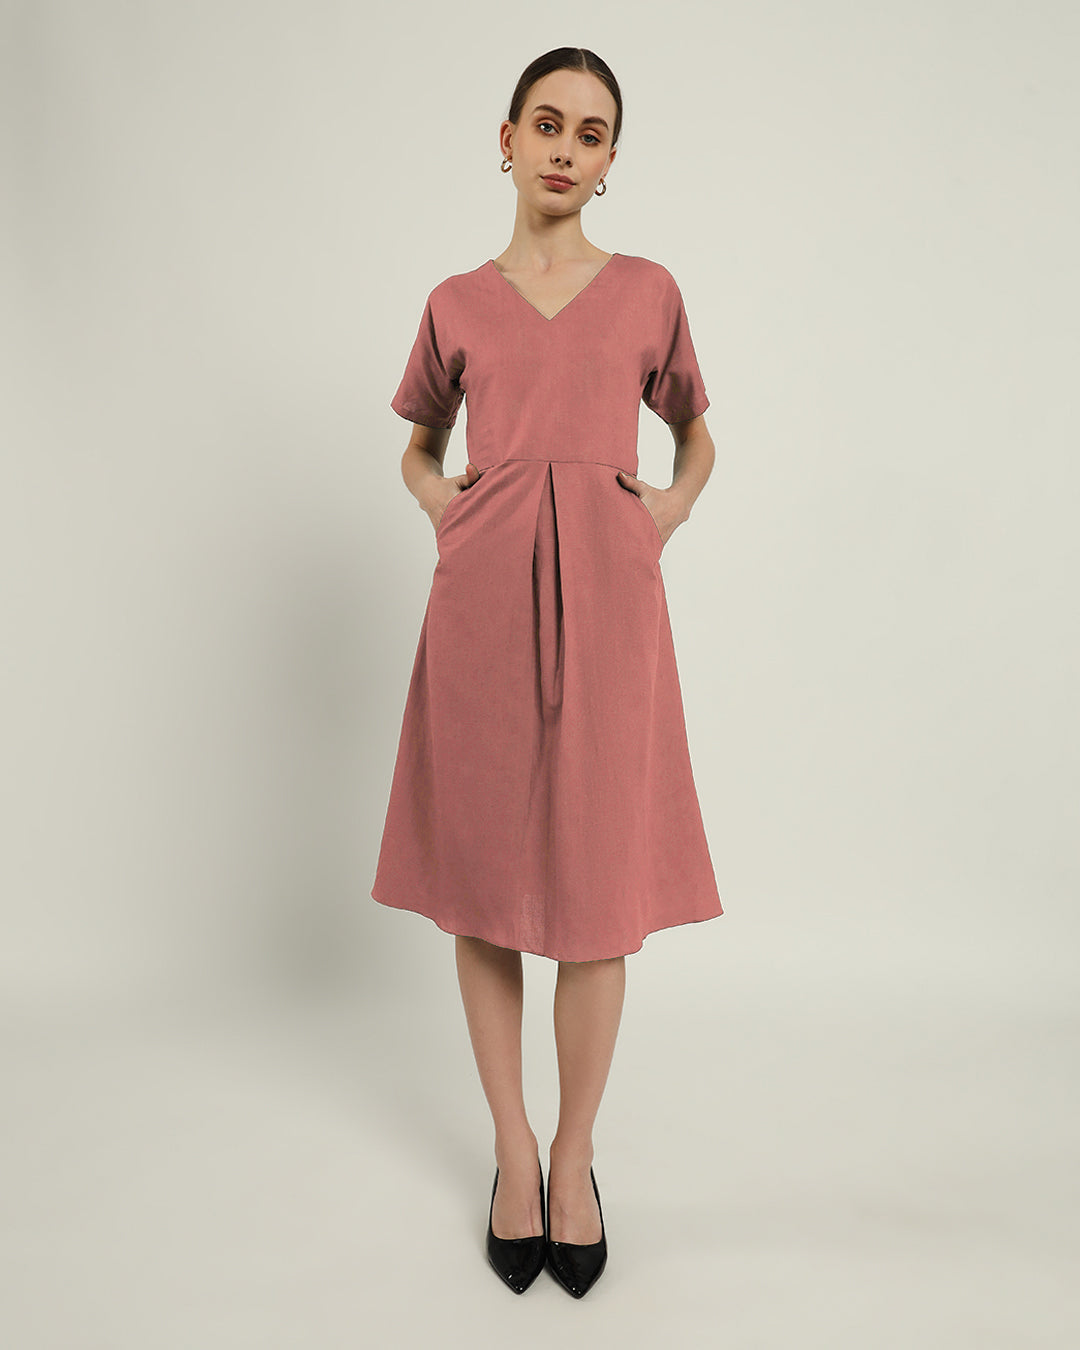 The Memphis Ivory Pink Dress